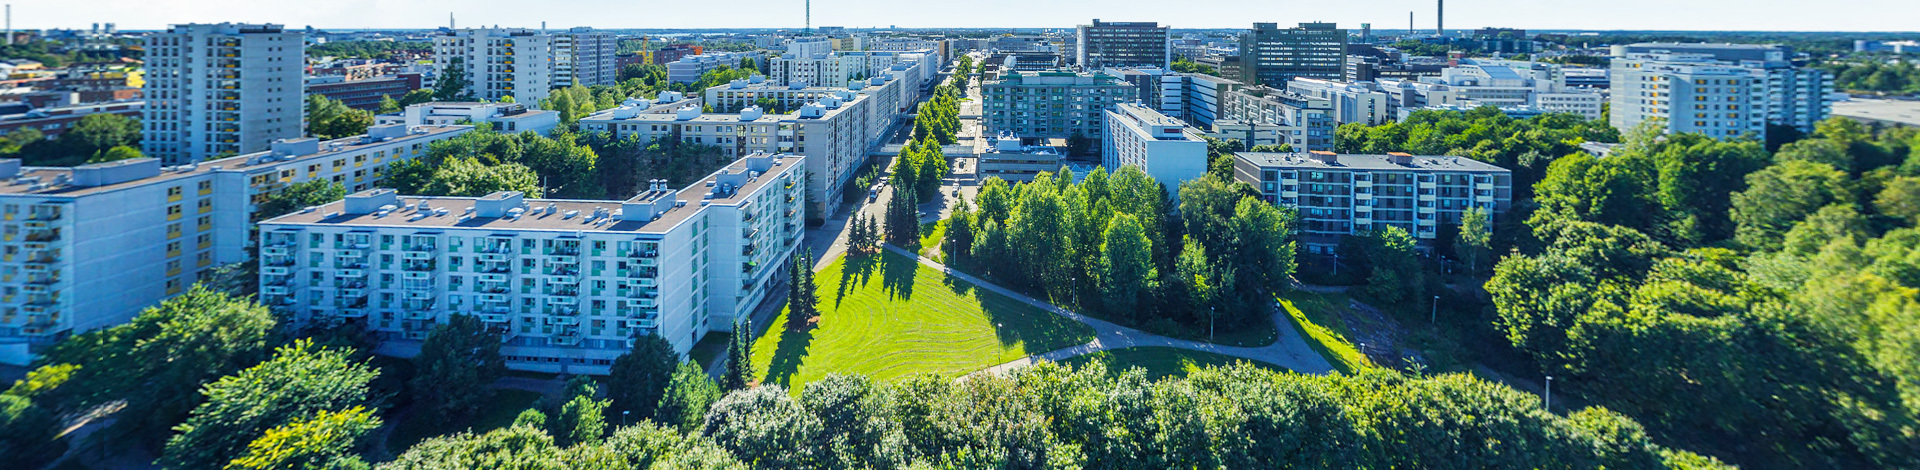 View of Pasila, Helsinki